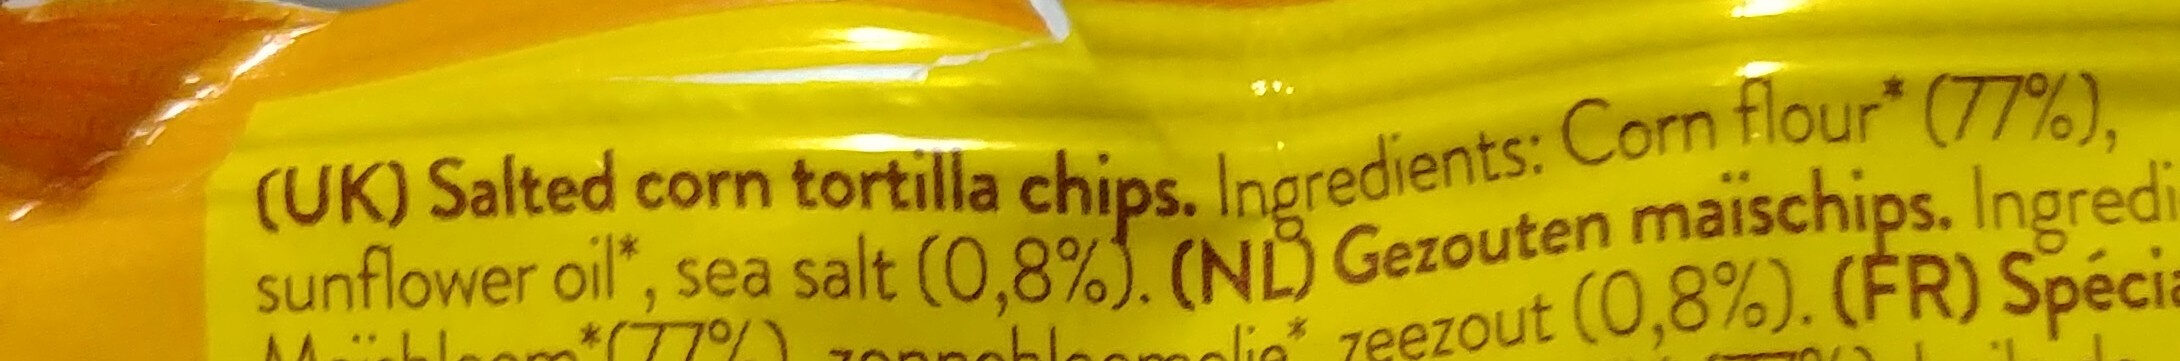 Natural Corn Chips - Ingredients